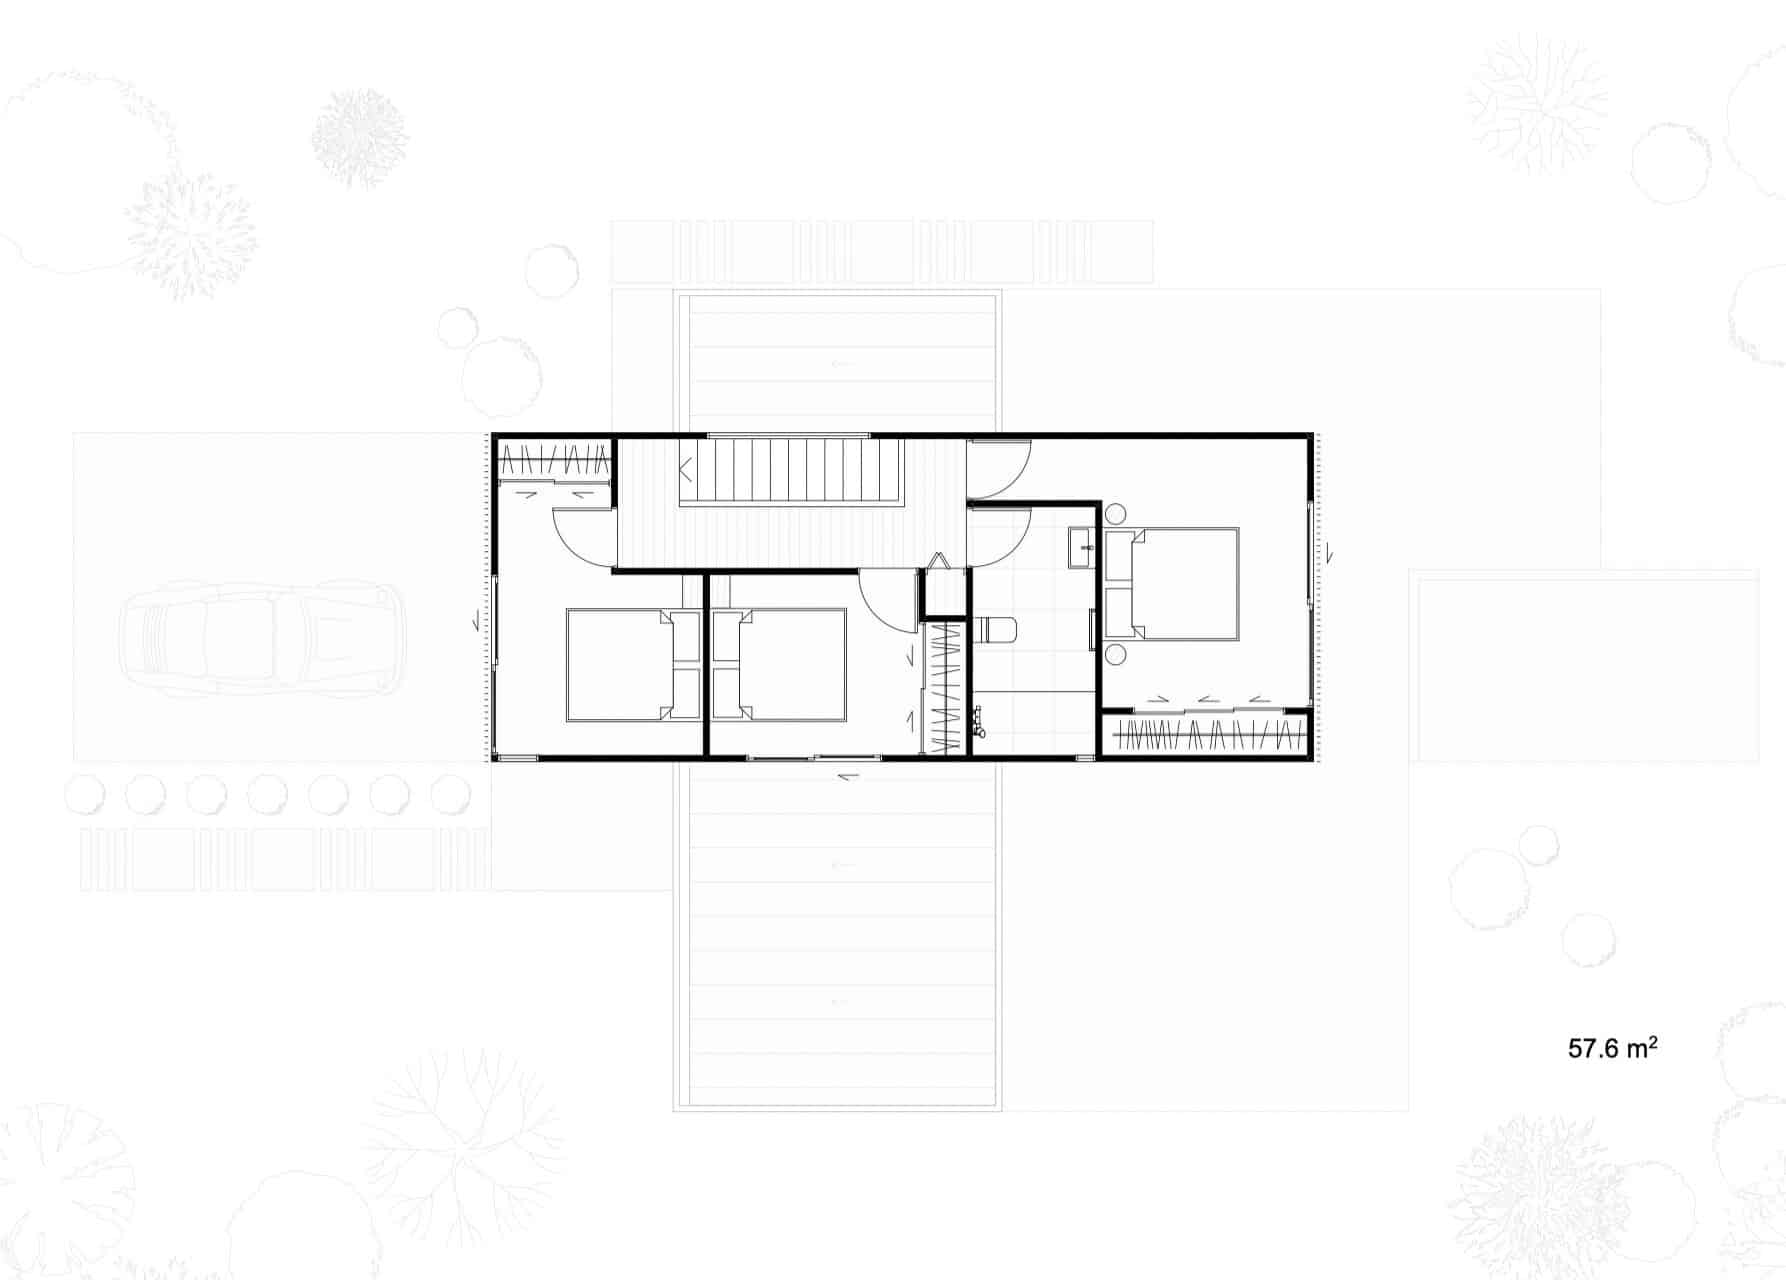 Multi Level No. 1 Floor Plan